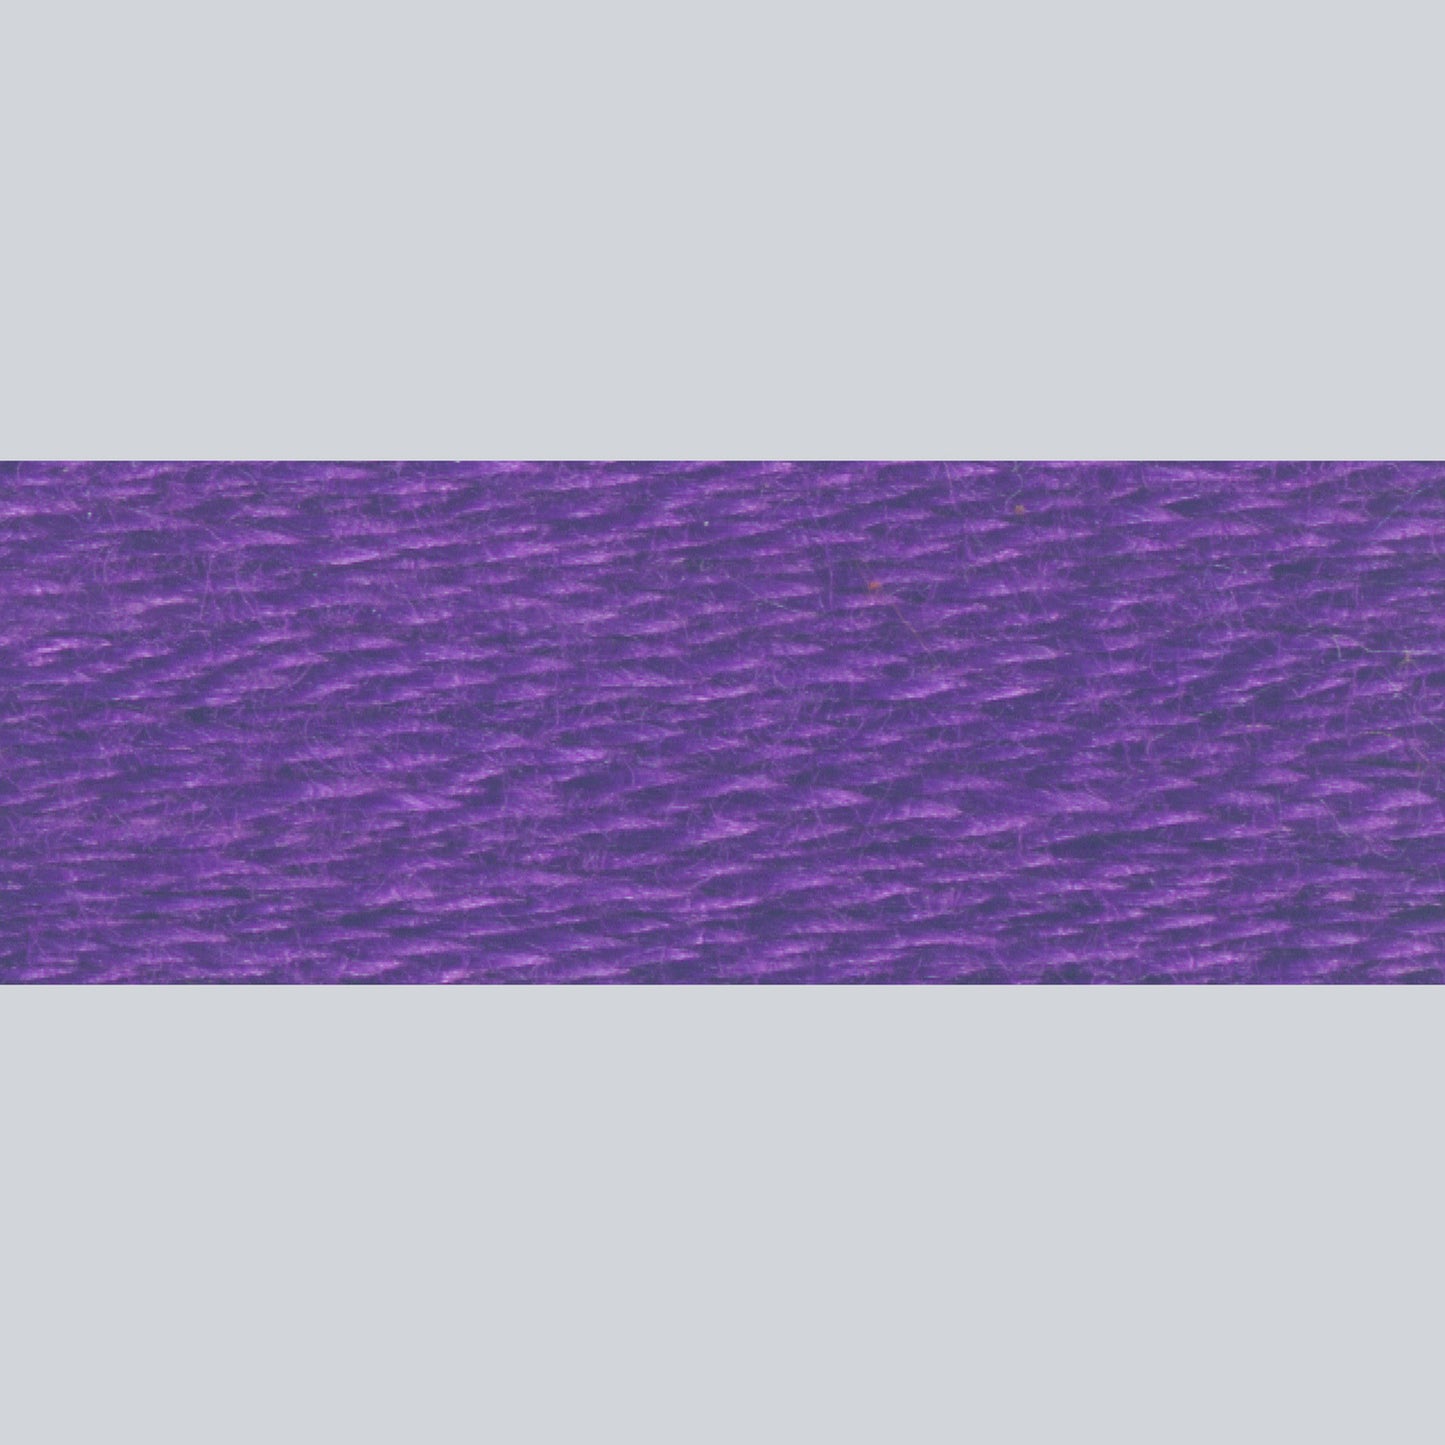 DMC Embroidery Floss - 552 Medium Violet Alternative View #1